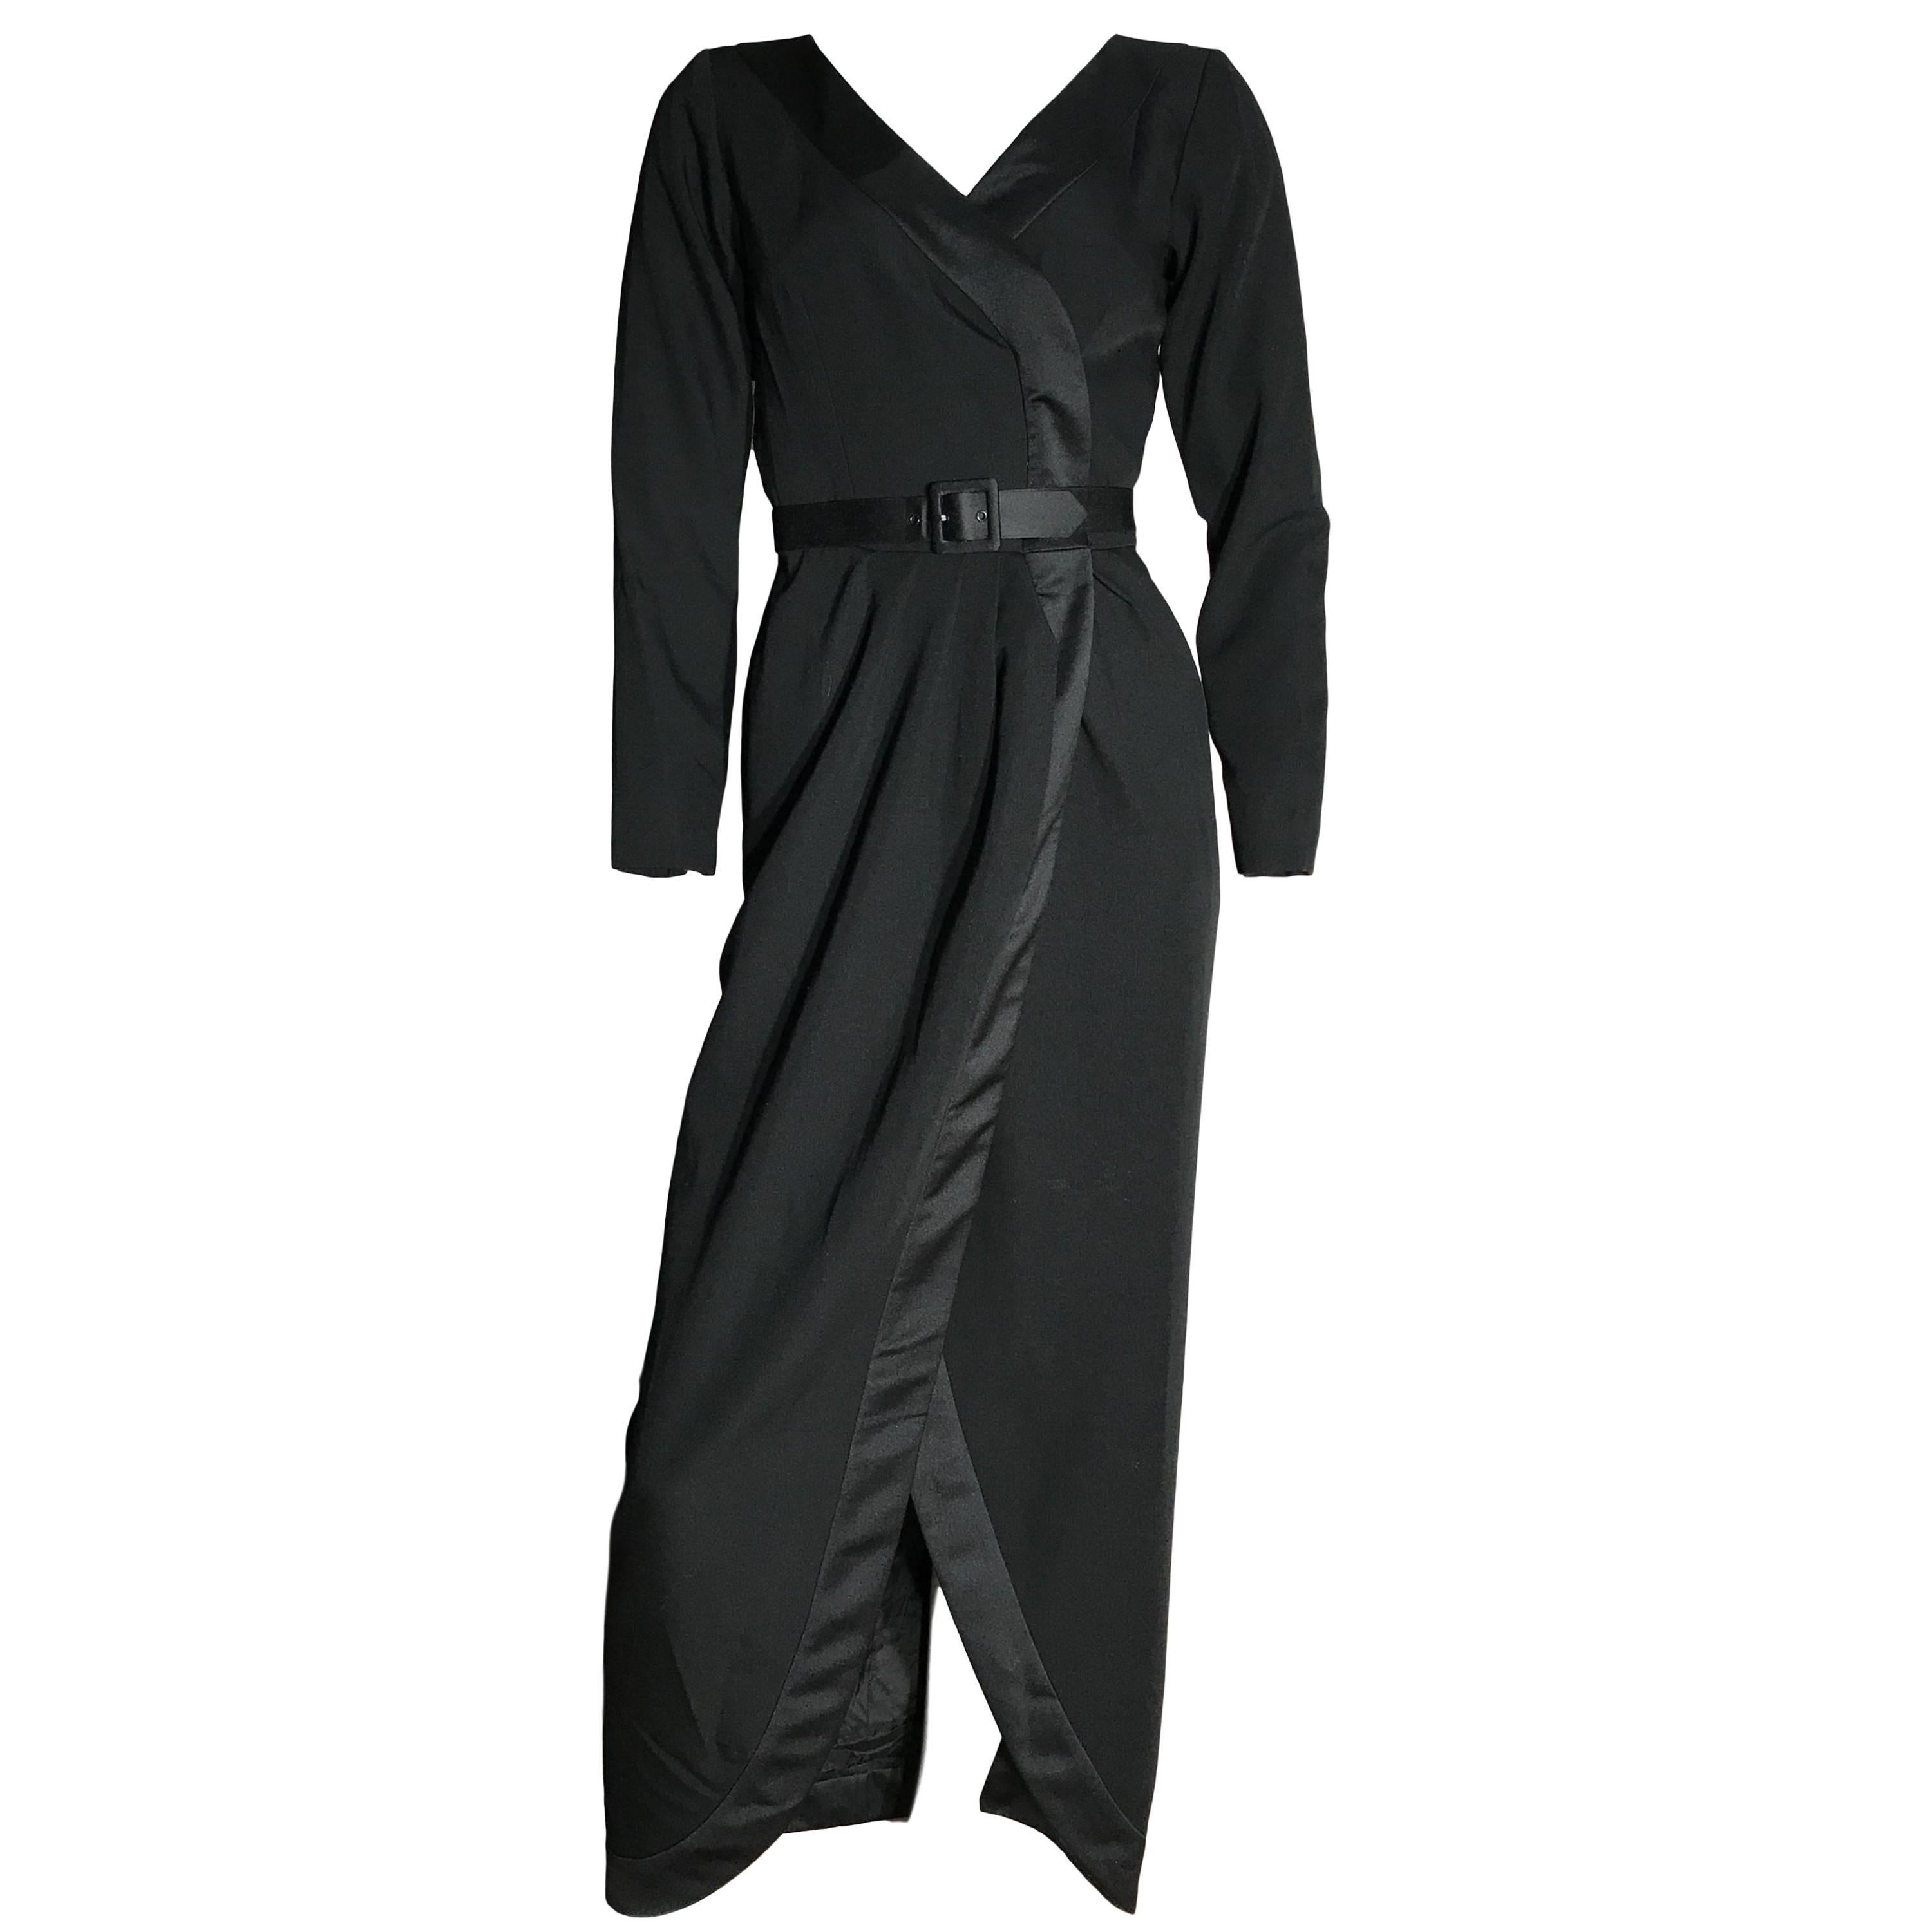 Yves Saint Laurent "Le Smoking" Dress Black Wool Maxi Tuxedo Evening Satin Trim For Sale